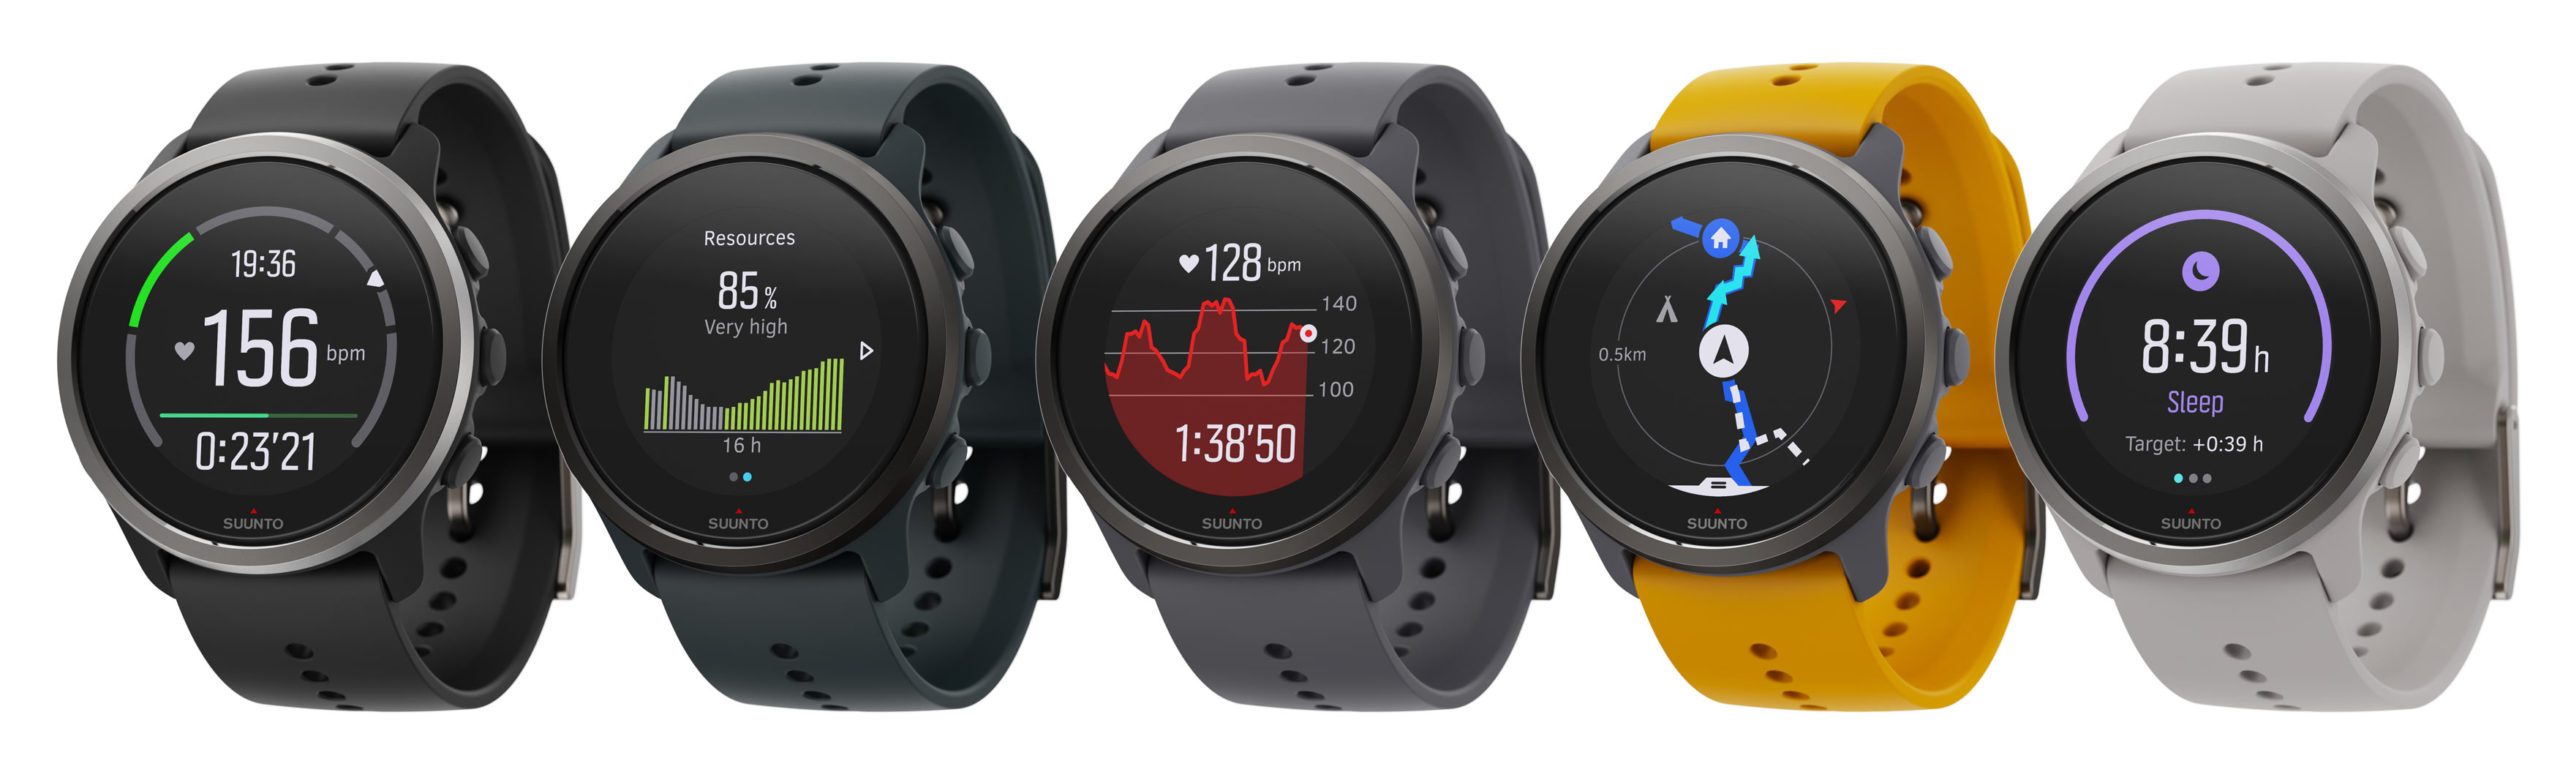 New 39g Suunto 5 Peak GPS watch packs 100 hours of tracking